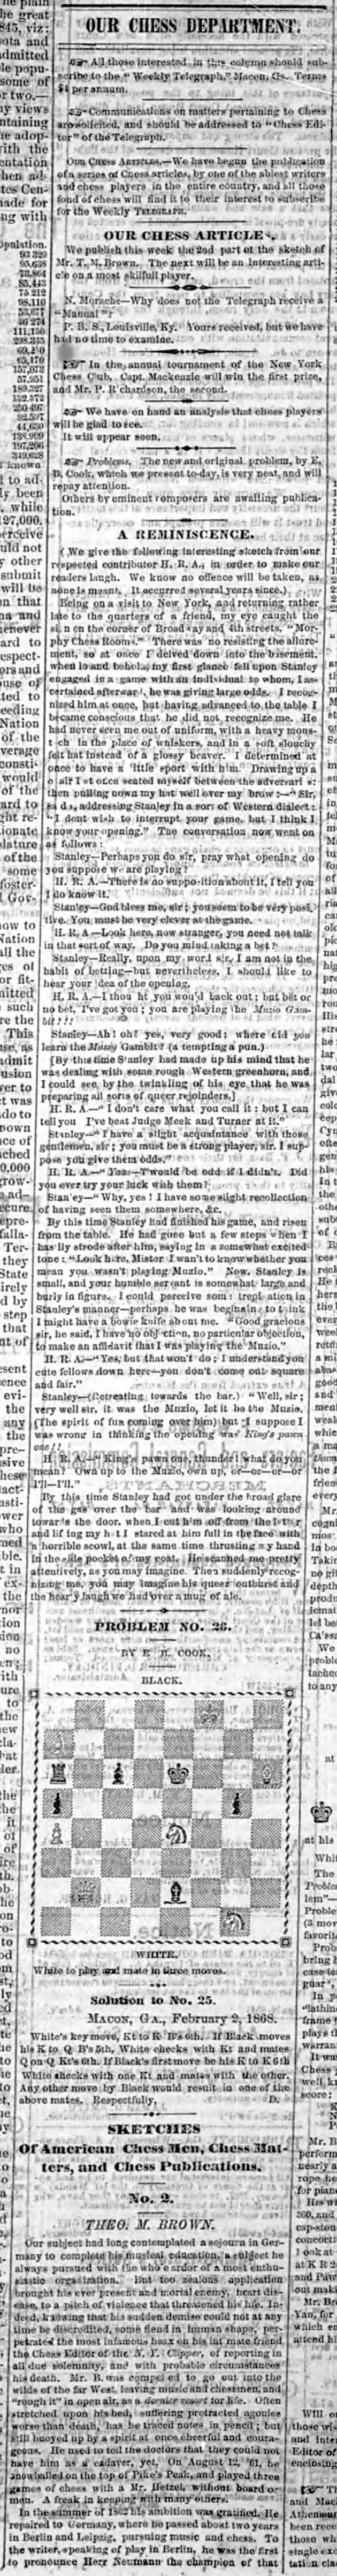 1867.02.08-01 Macon Georgia Weekly Telegraph.jpg